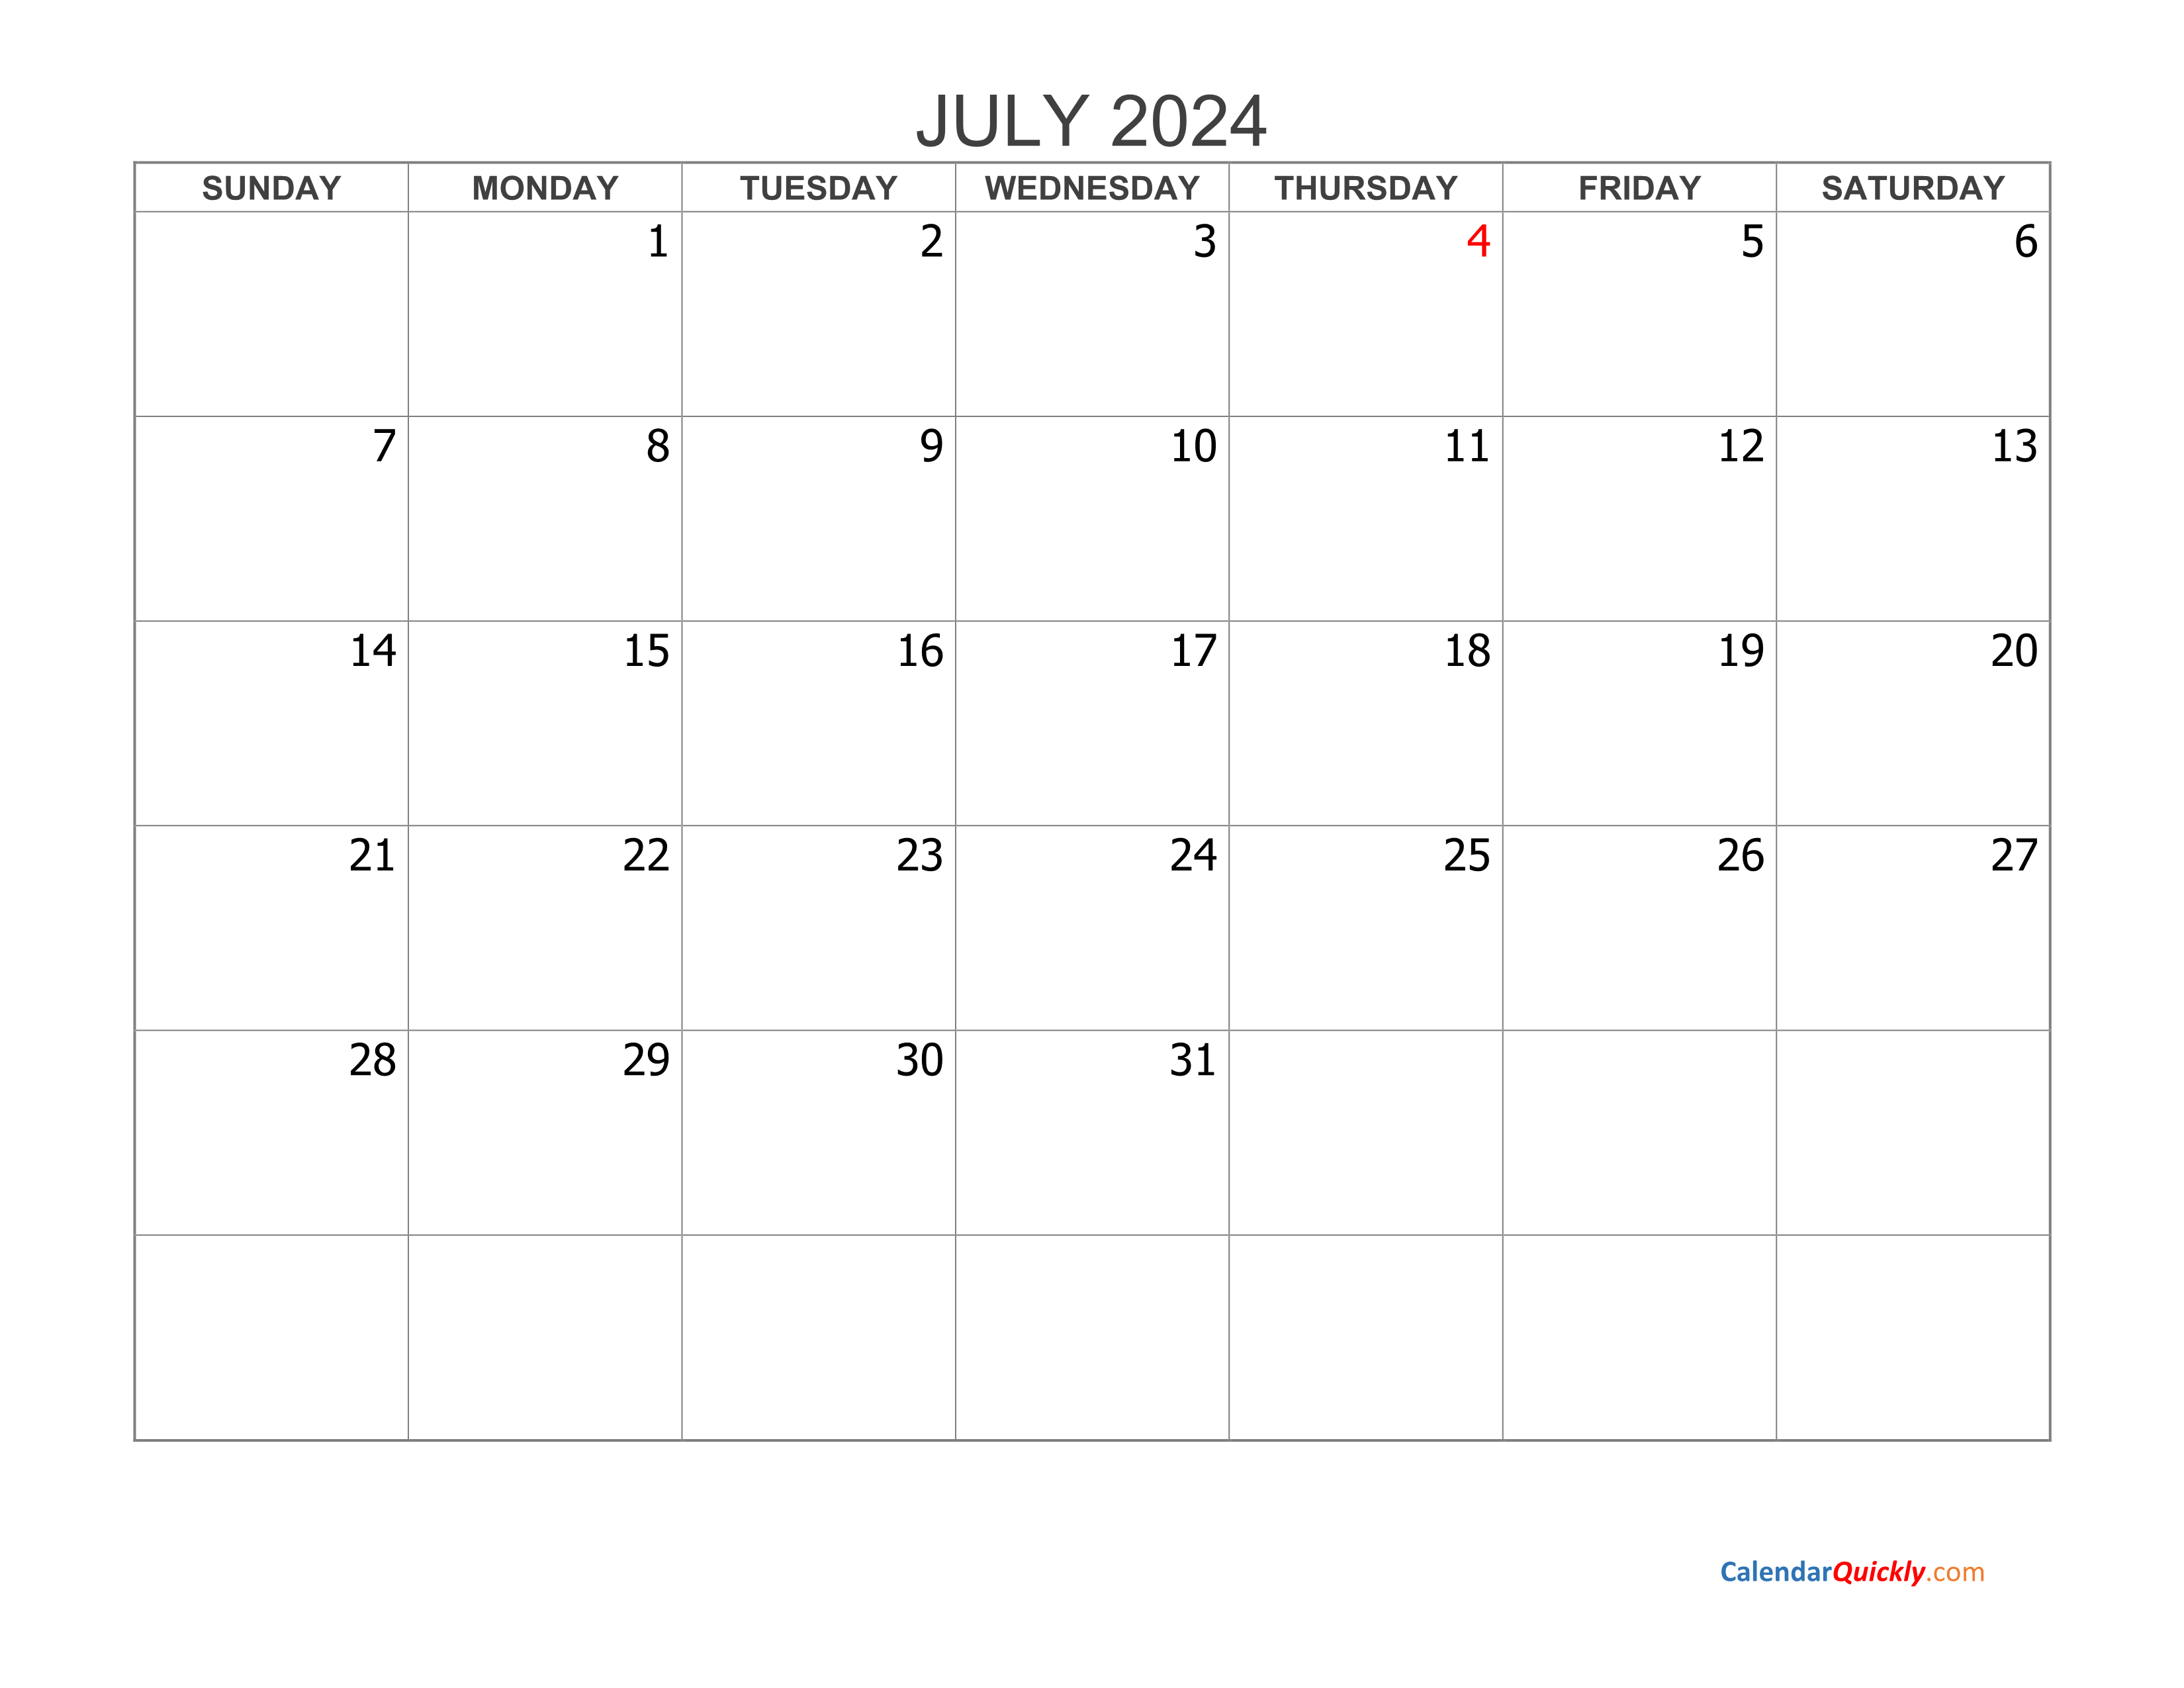 July 2024 Blank Calendar | Calendar Quickly